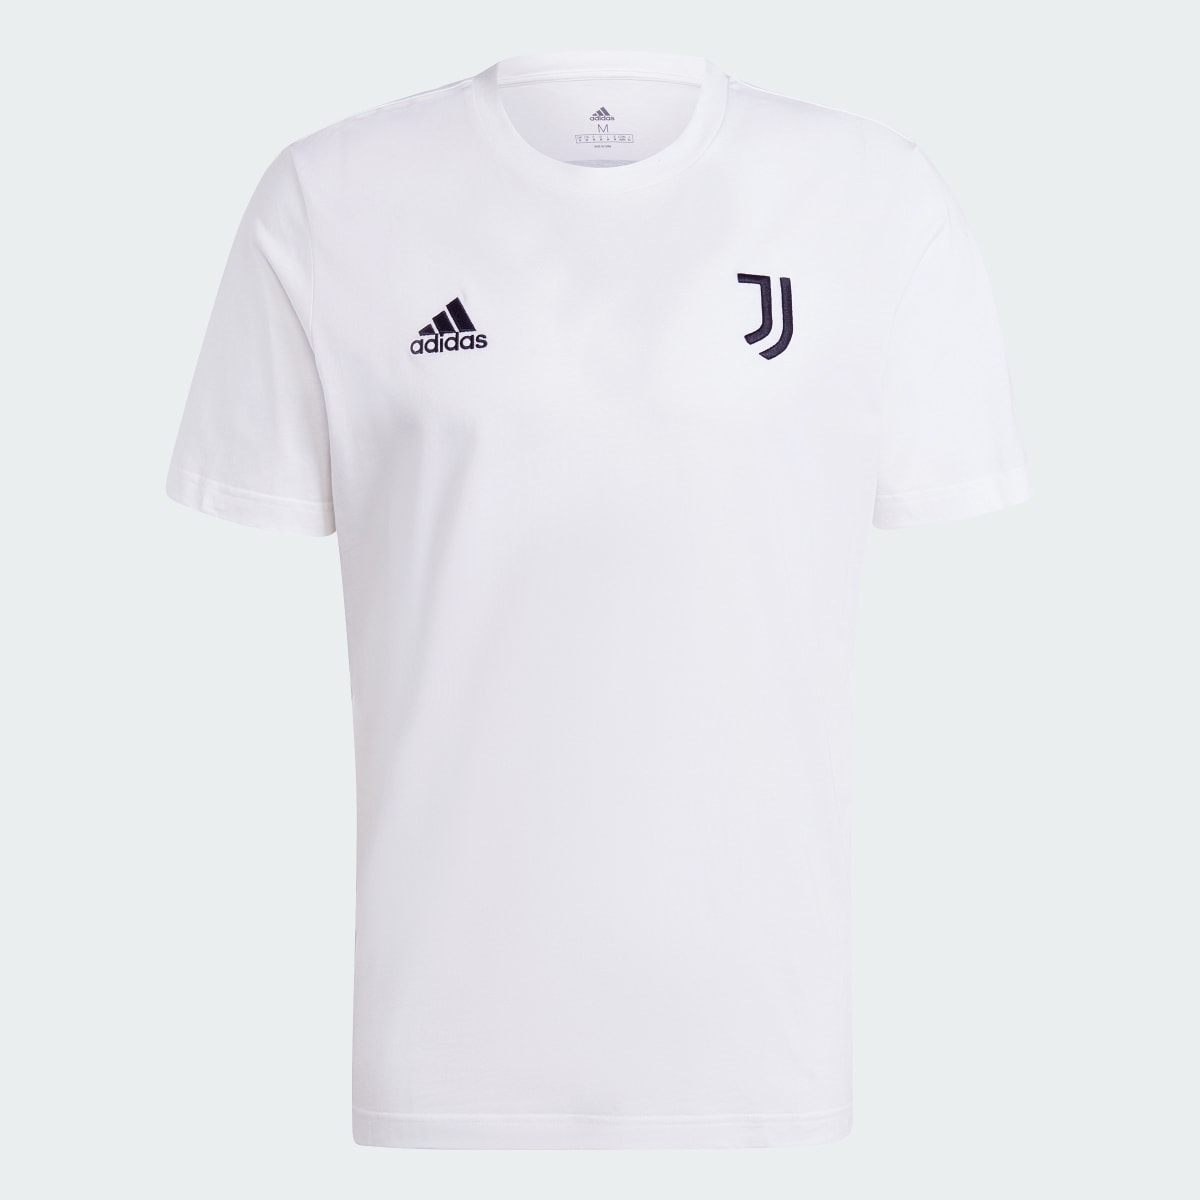 Adidas Juventus DNA T-Shirt. 5